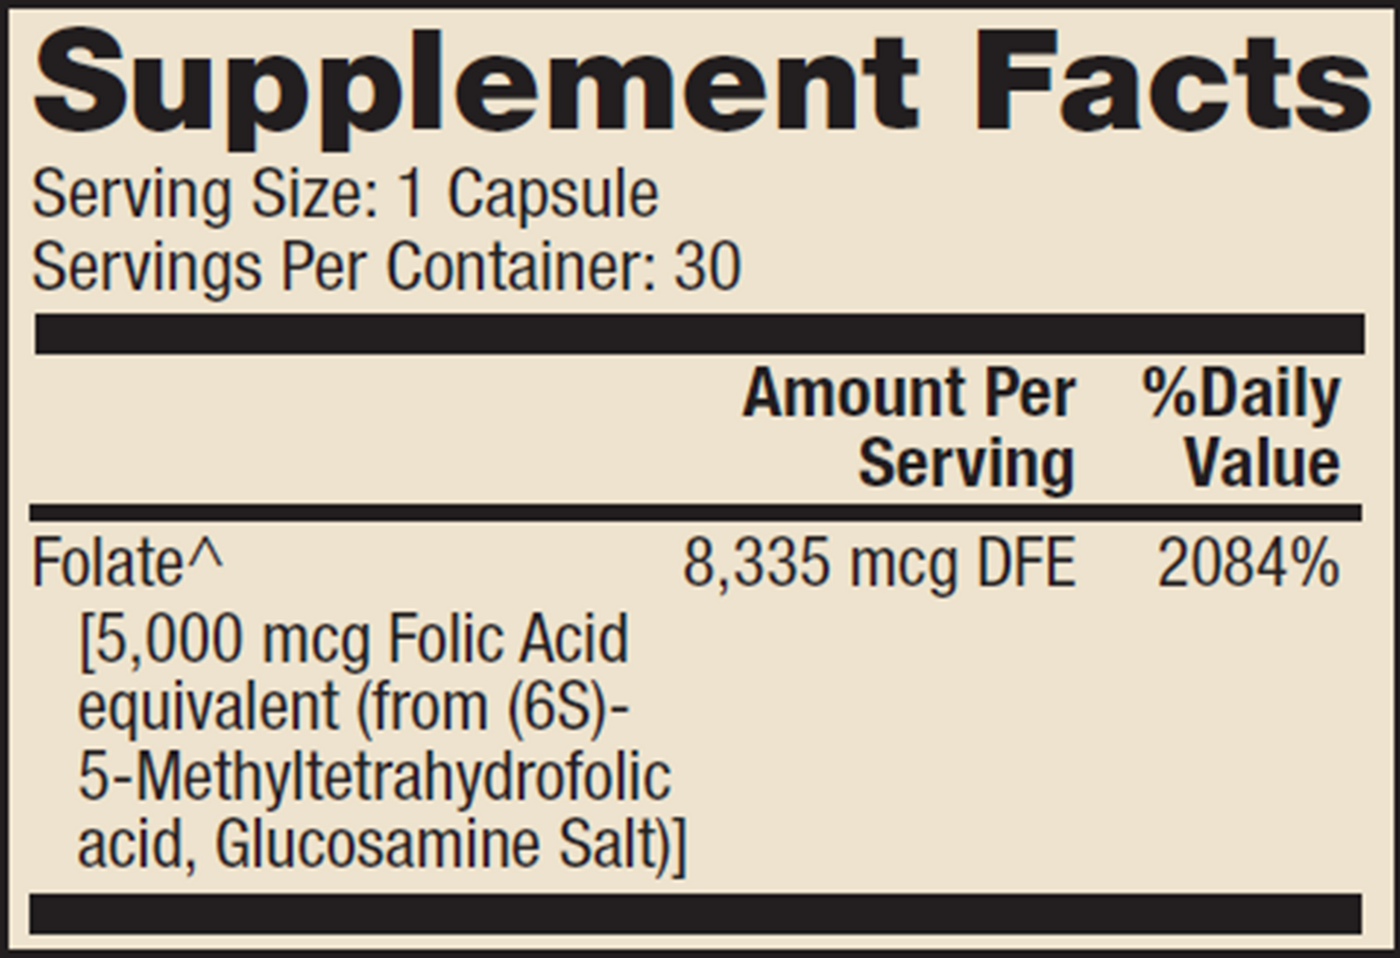 Methyl Folate 5 mg  Curated Wellness